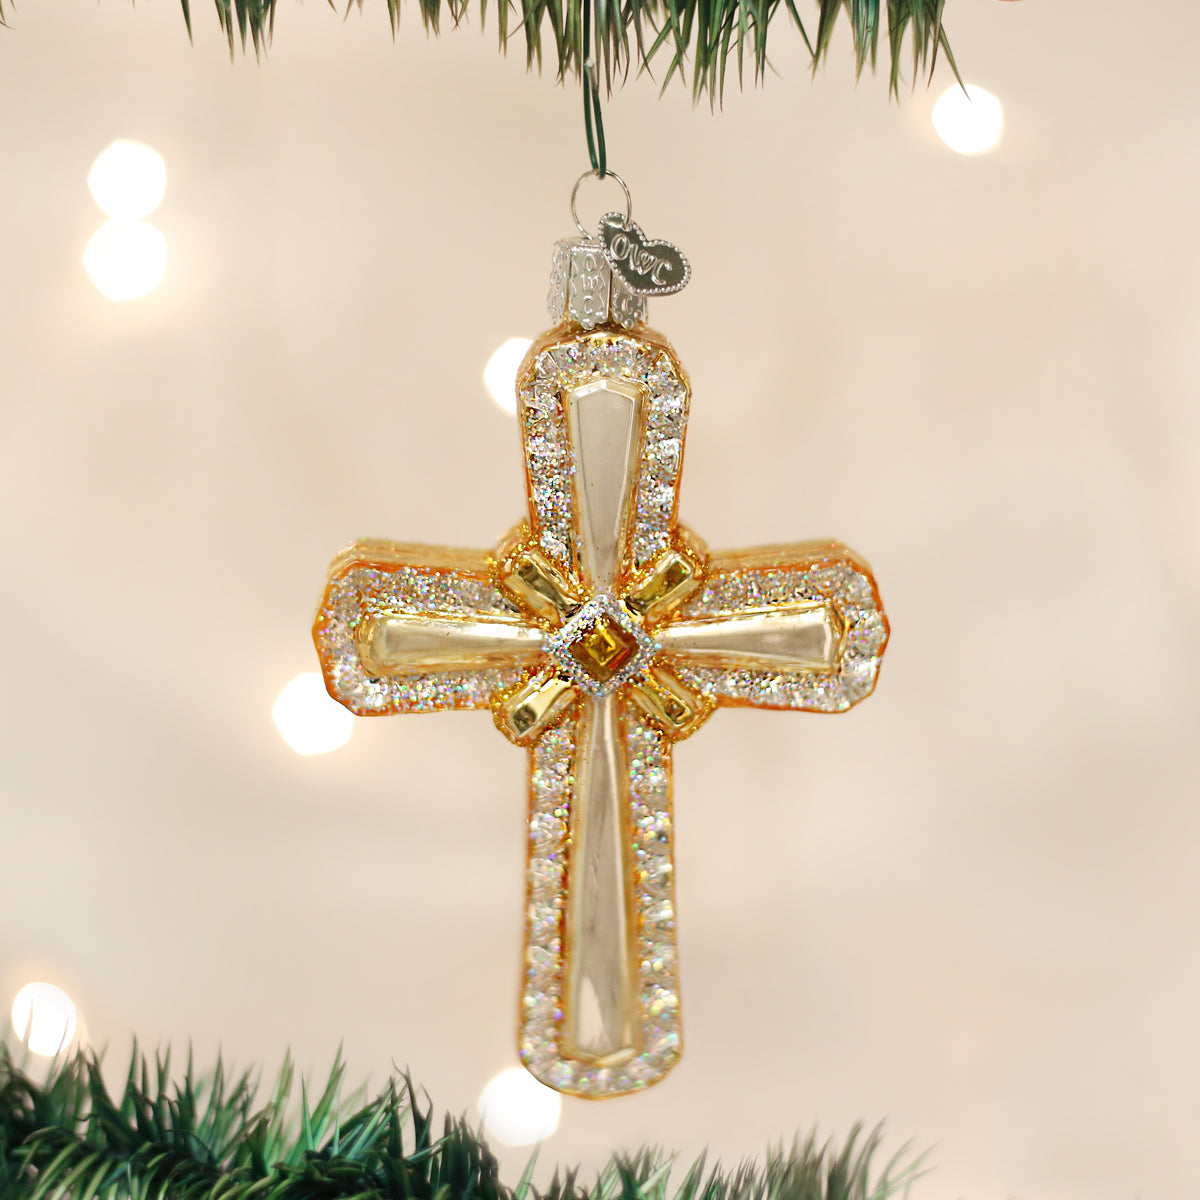 Holy Cross Ornament